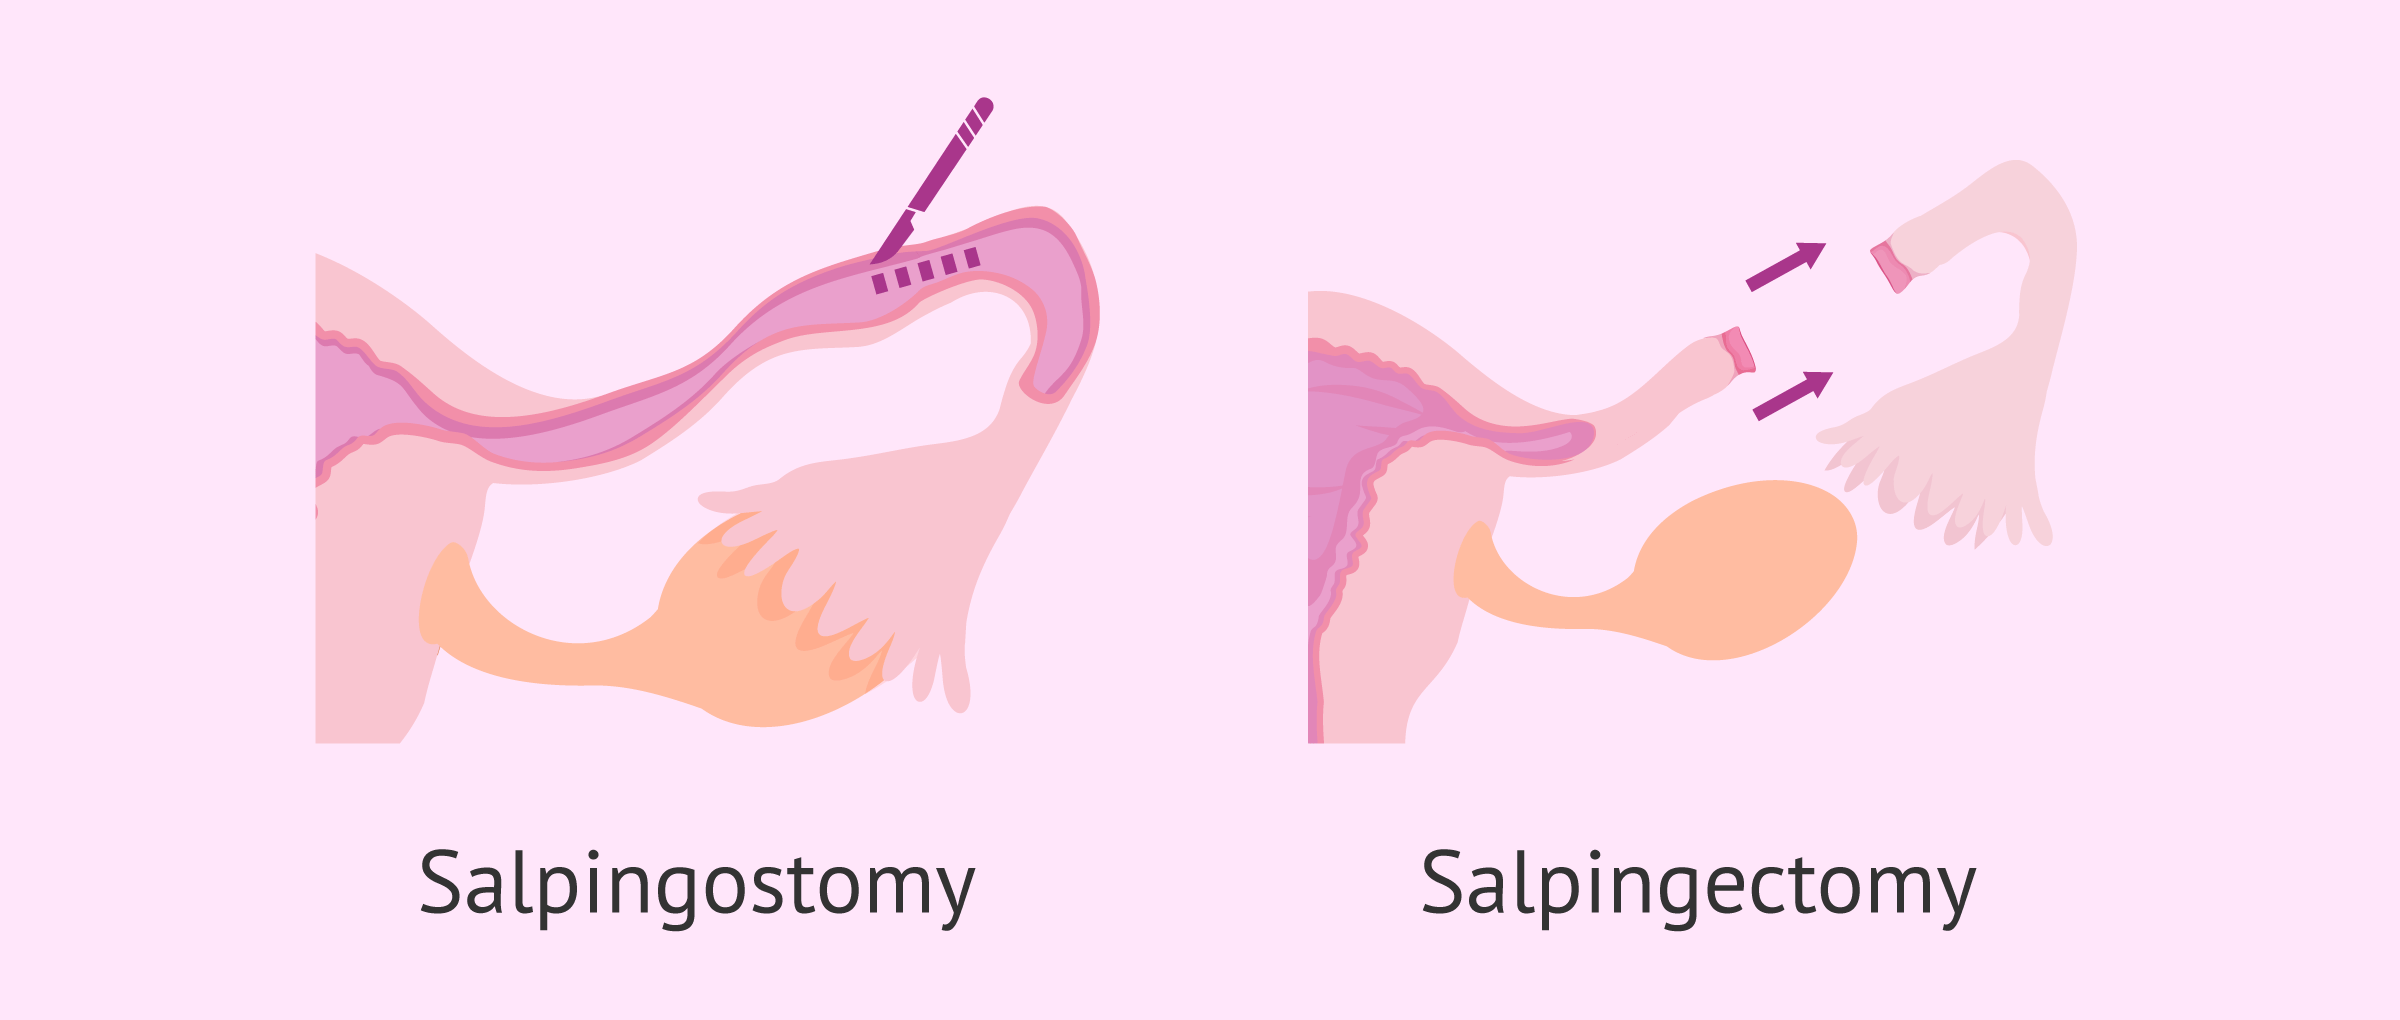 Salpingostomy and salpingectomy for treatment of ectopic pregnancy